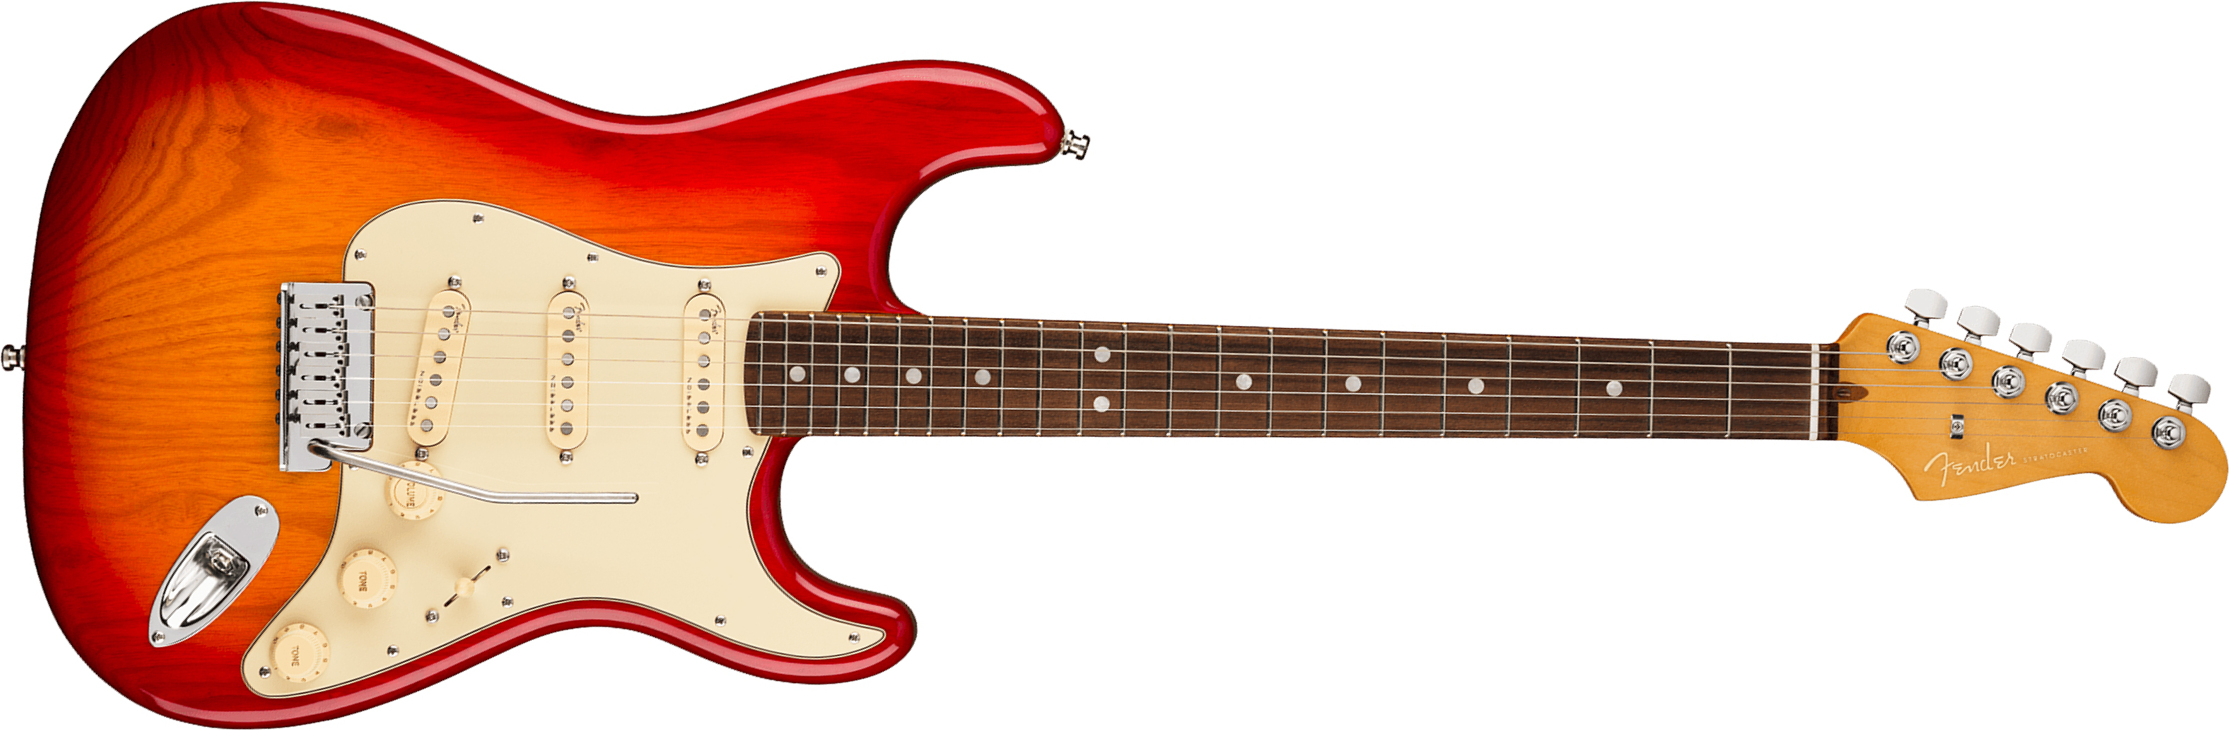 Fender Strat American Ultra Hss 2019 Usa Mn - Plasma Red Burst - Str shape electric guitar - Main picture